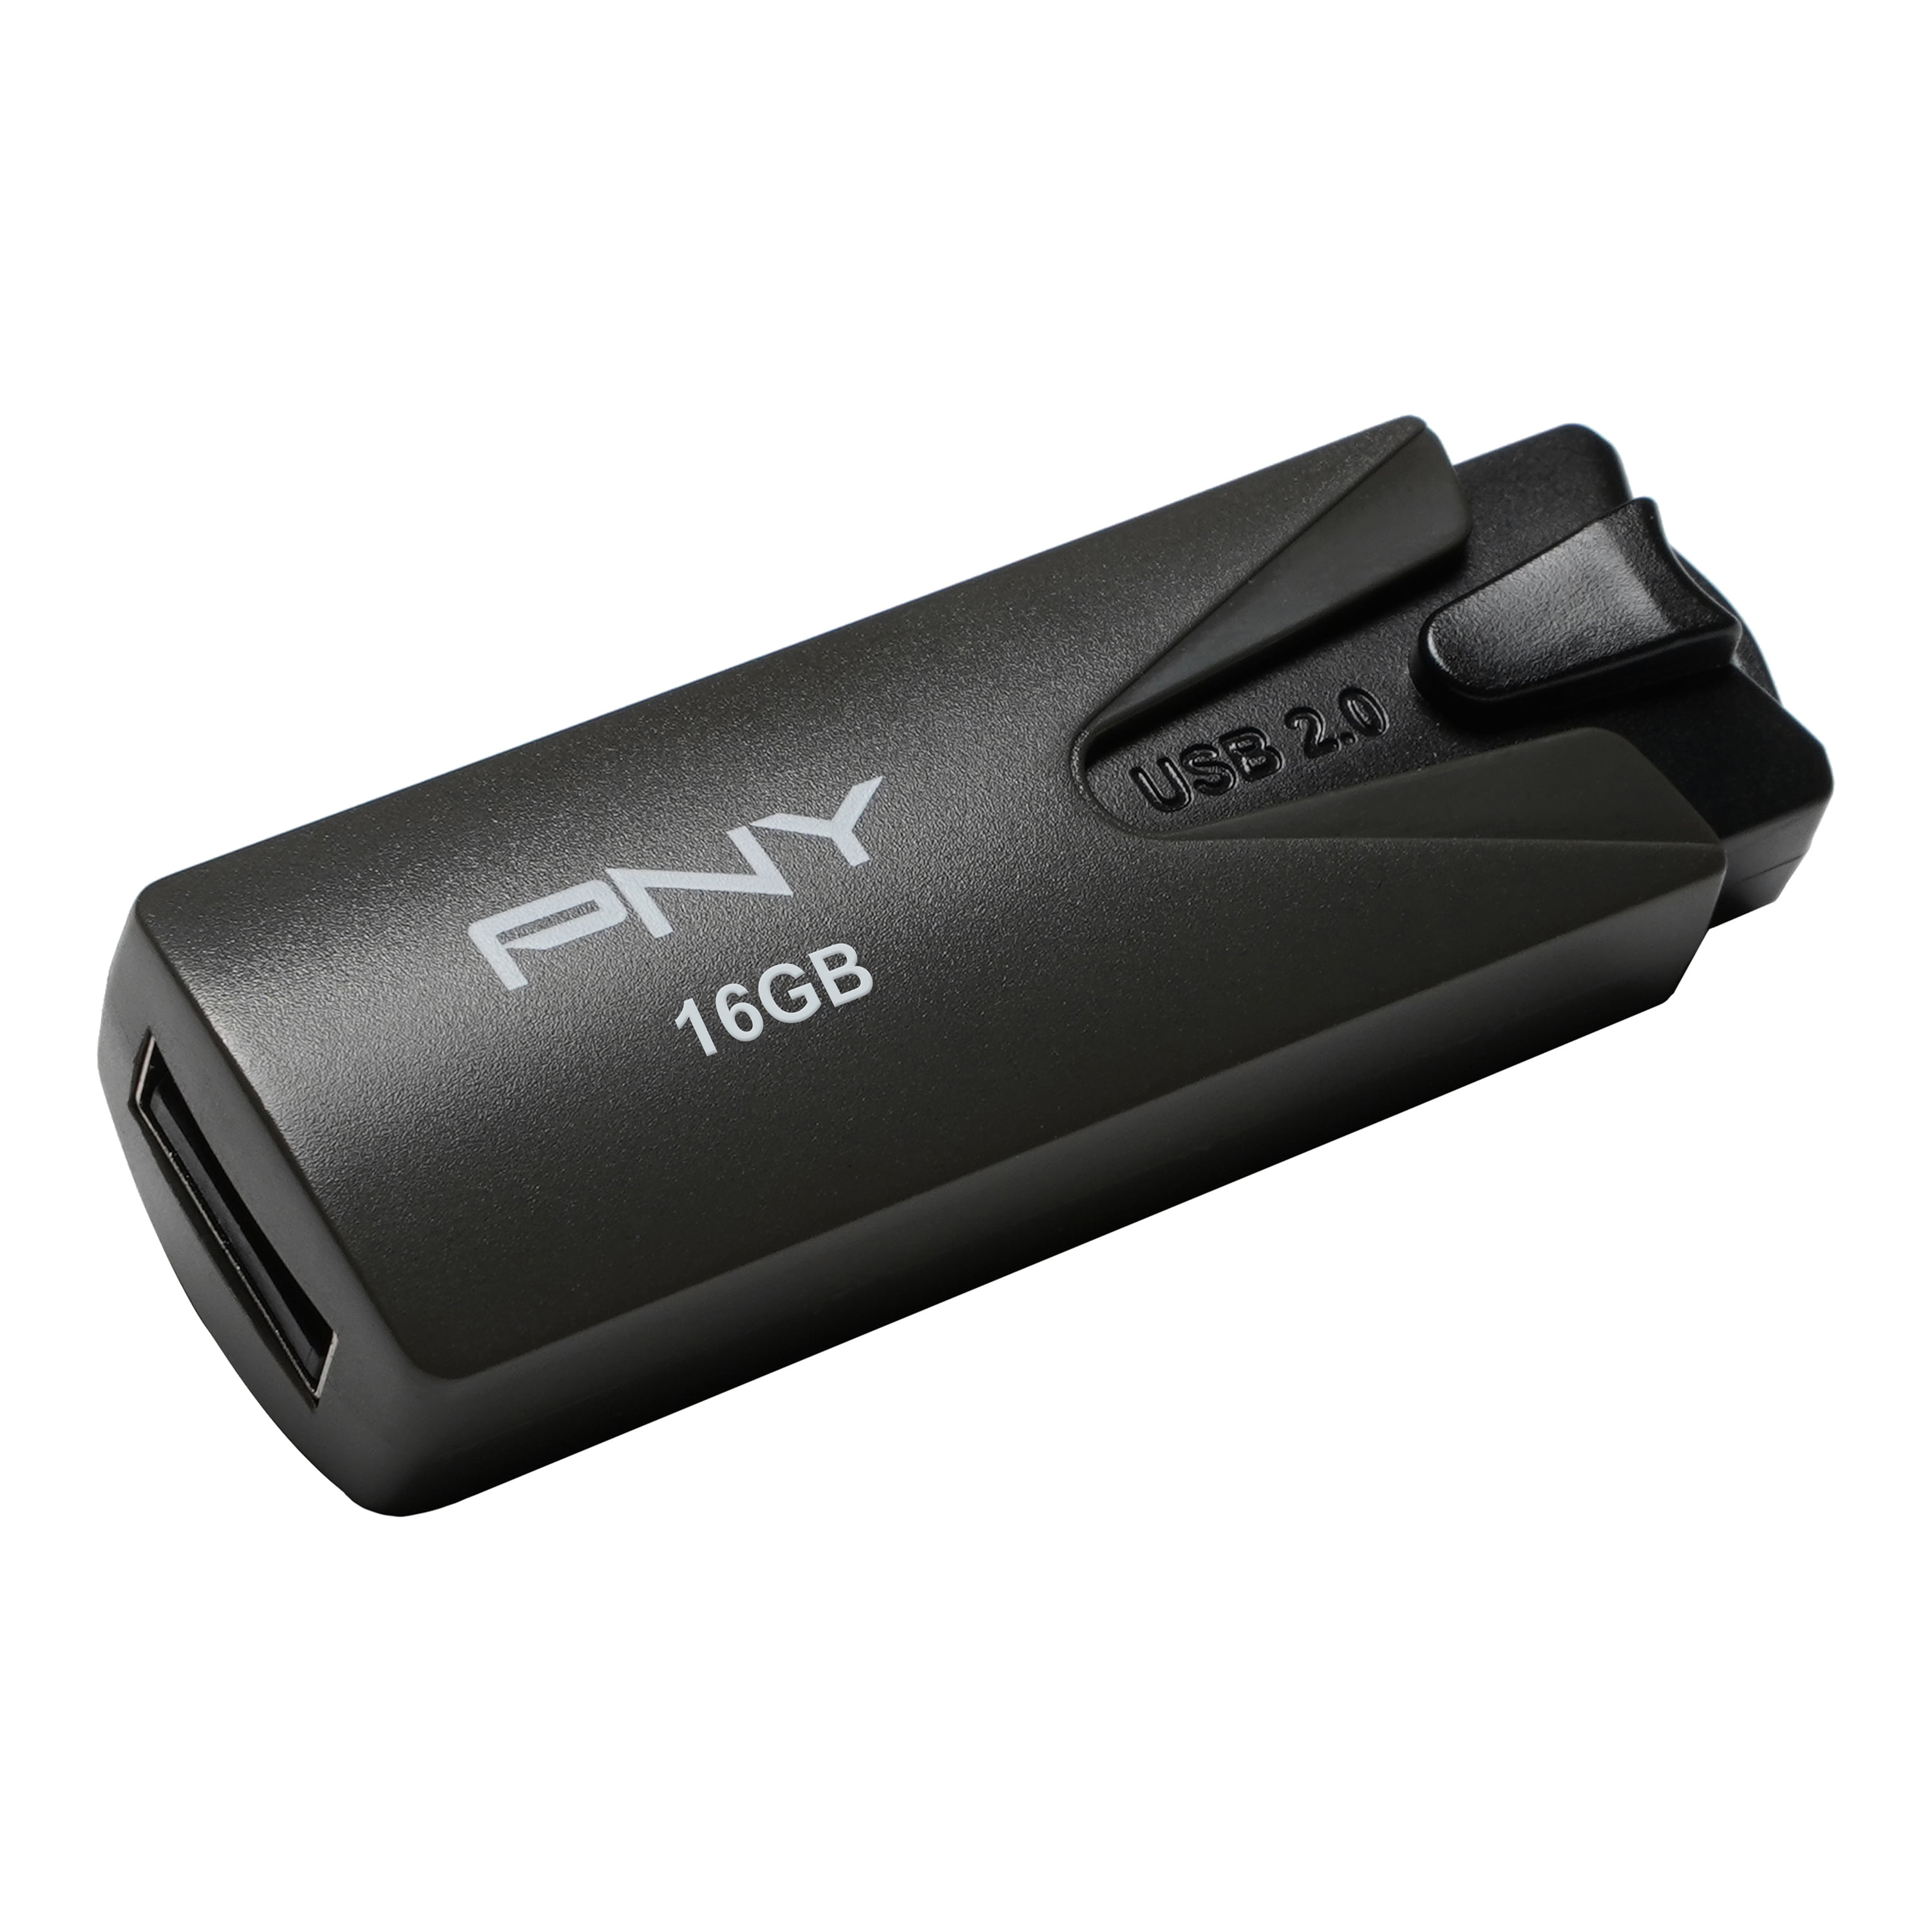 Kootion 4GB USB 2.0 Flash Drive Thumb Drives Memory Stick, 5 